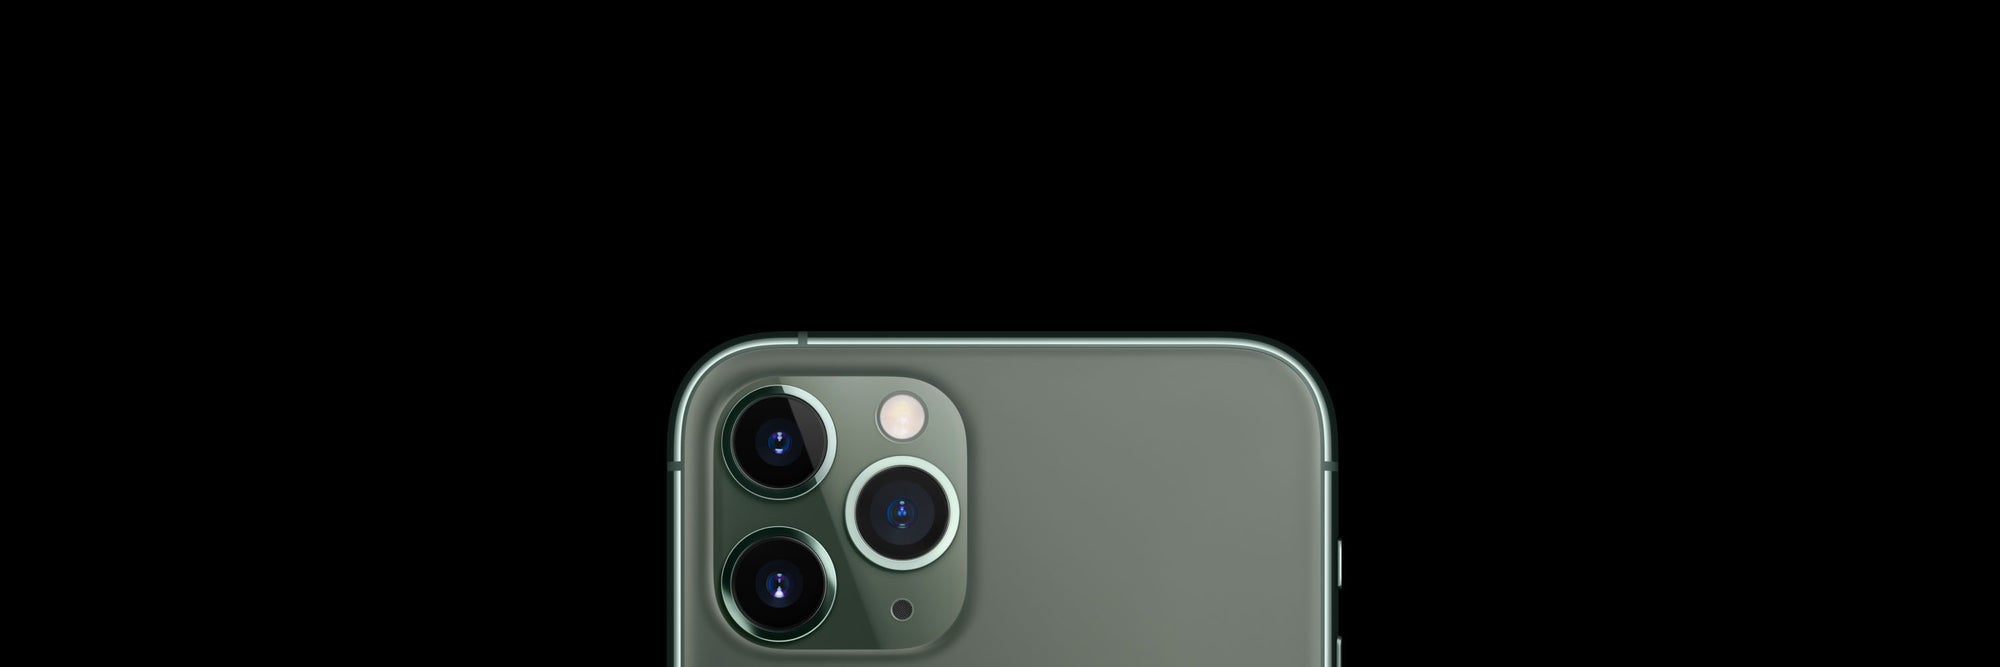 iPhone 11 | 11 Pro | 11 Pro Max - Cases & Accessories